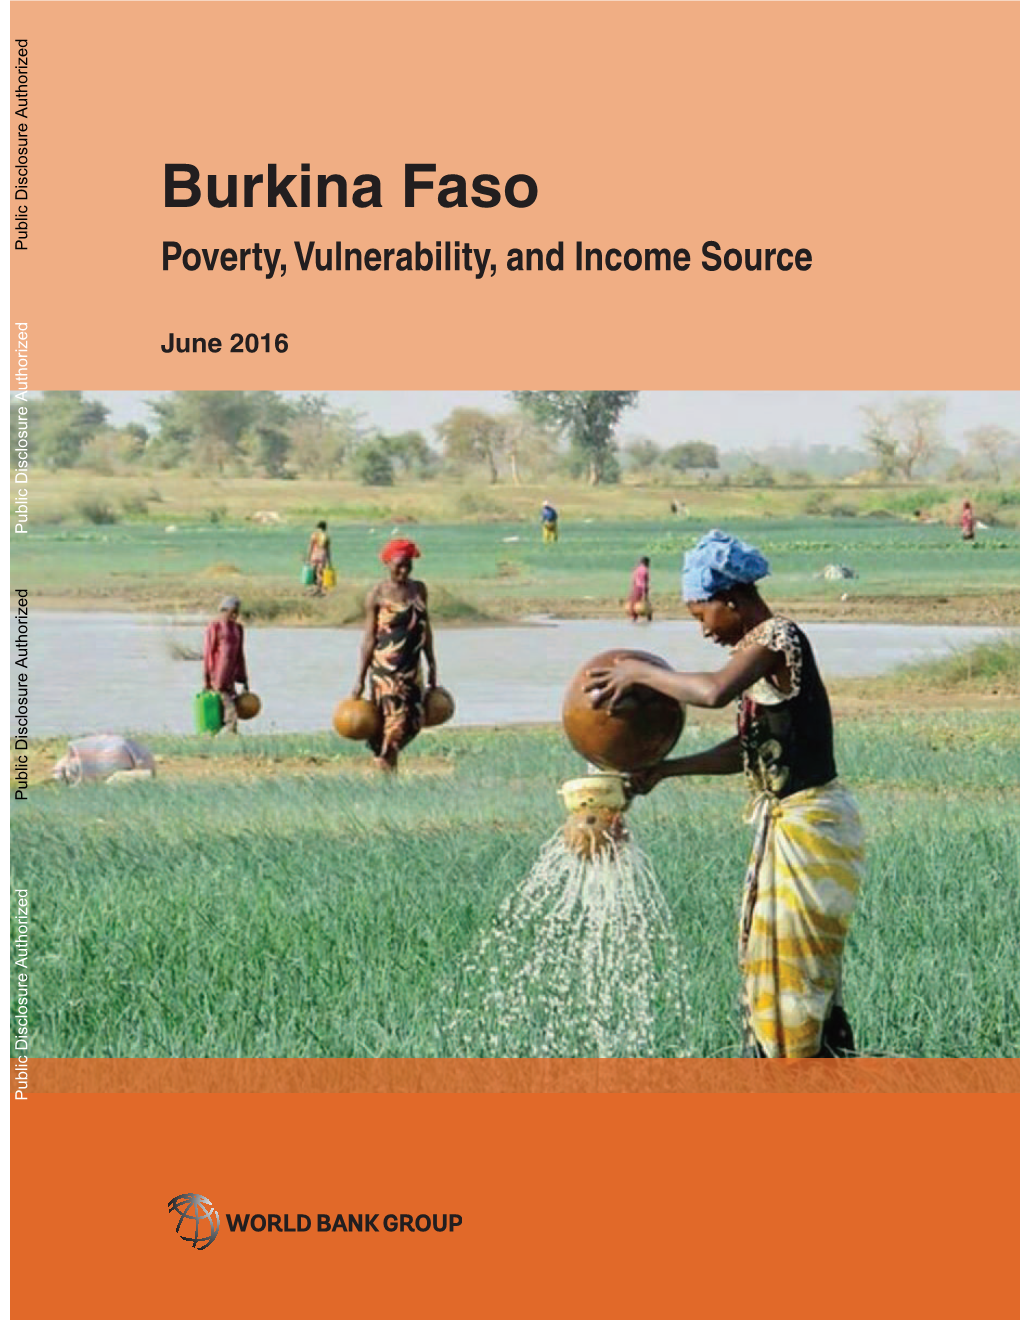 Burkina Faso Burkina